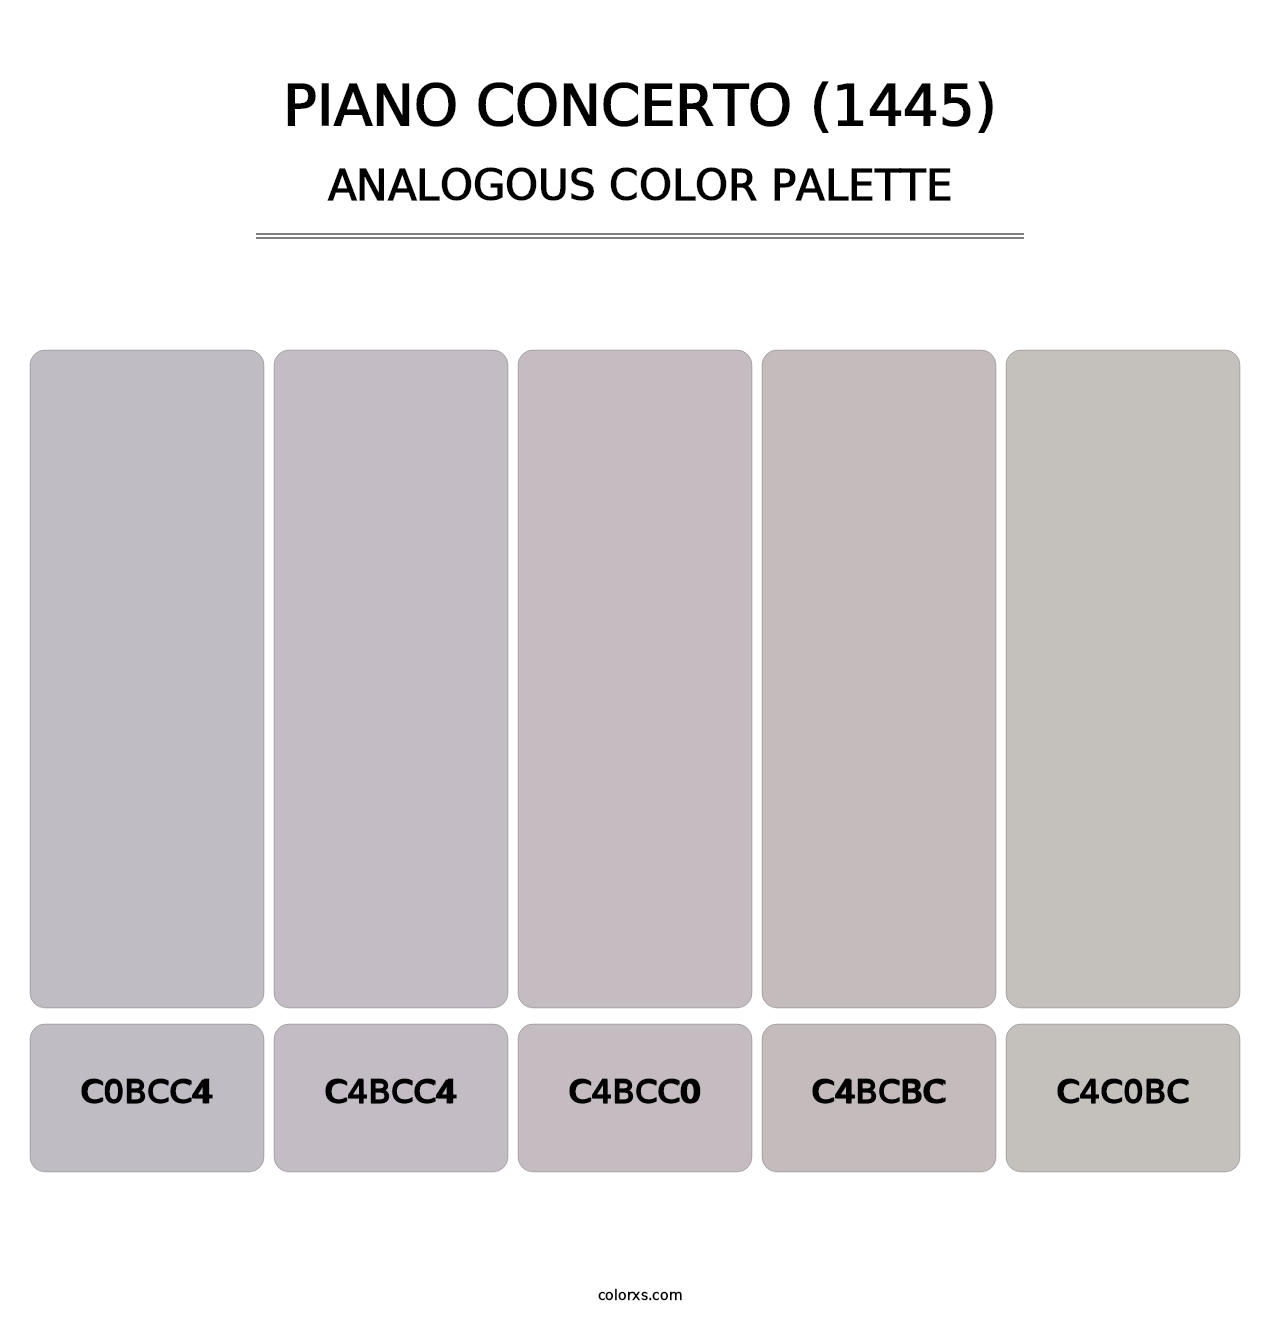 Piano Concerto (1445) - Analogous Color Palette